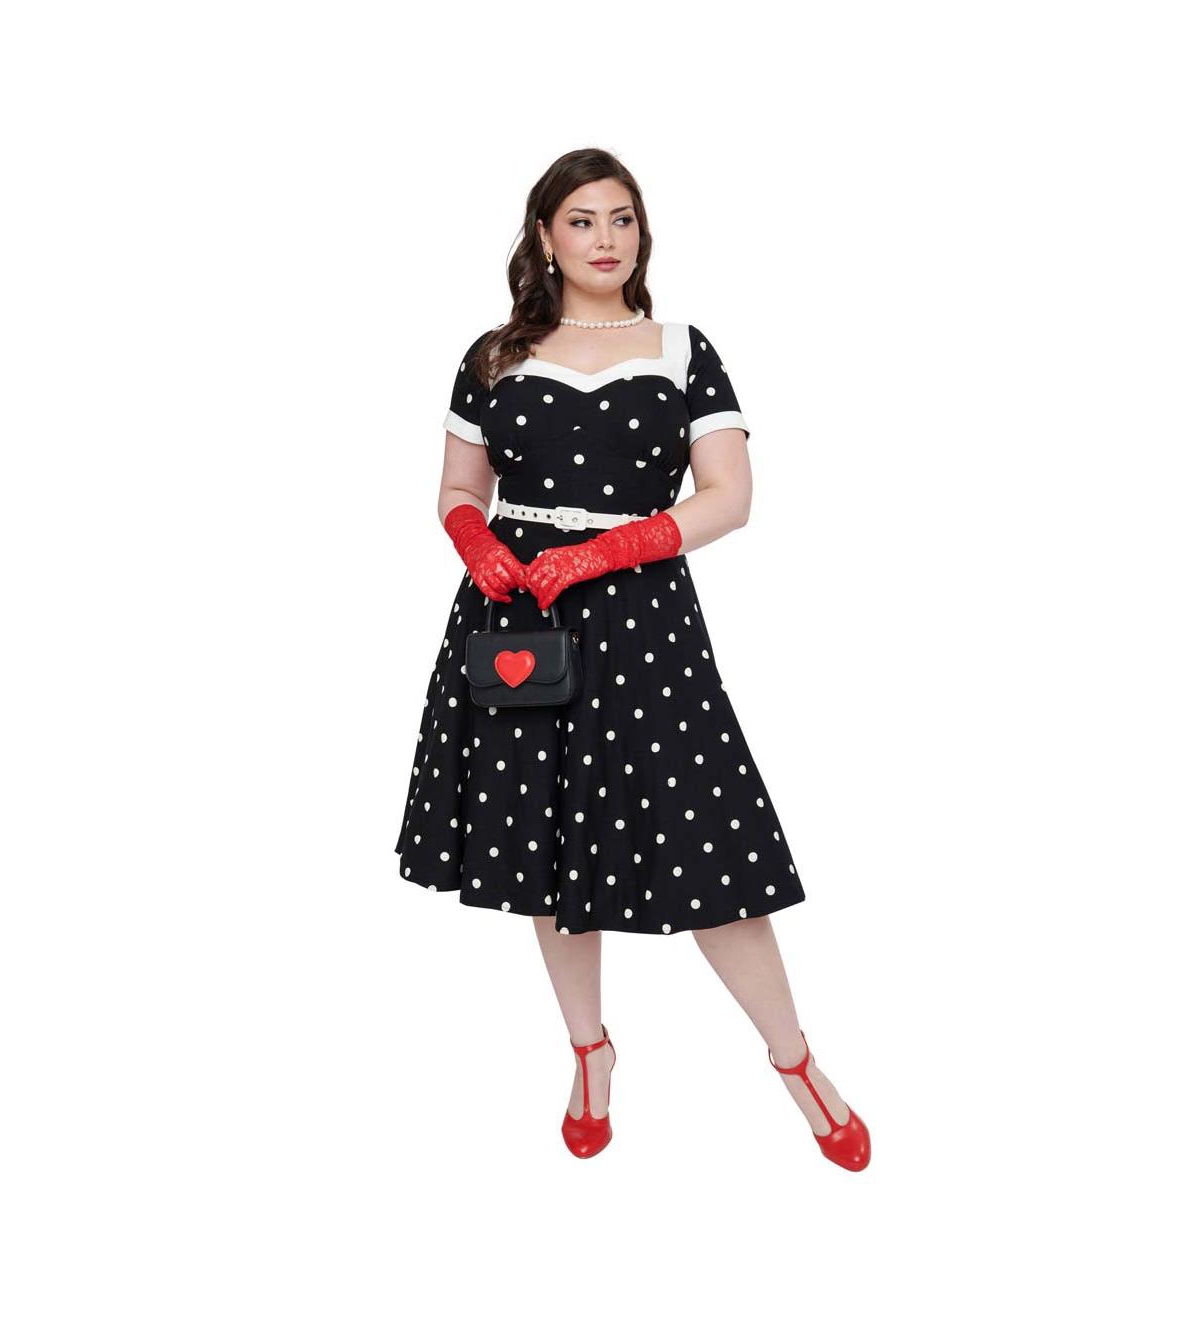 Plus Size 1950s Sweetheart Neckline Swing Dress - Black  white polka dot